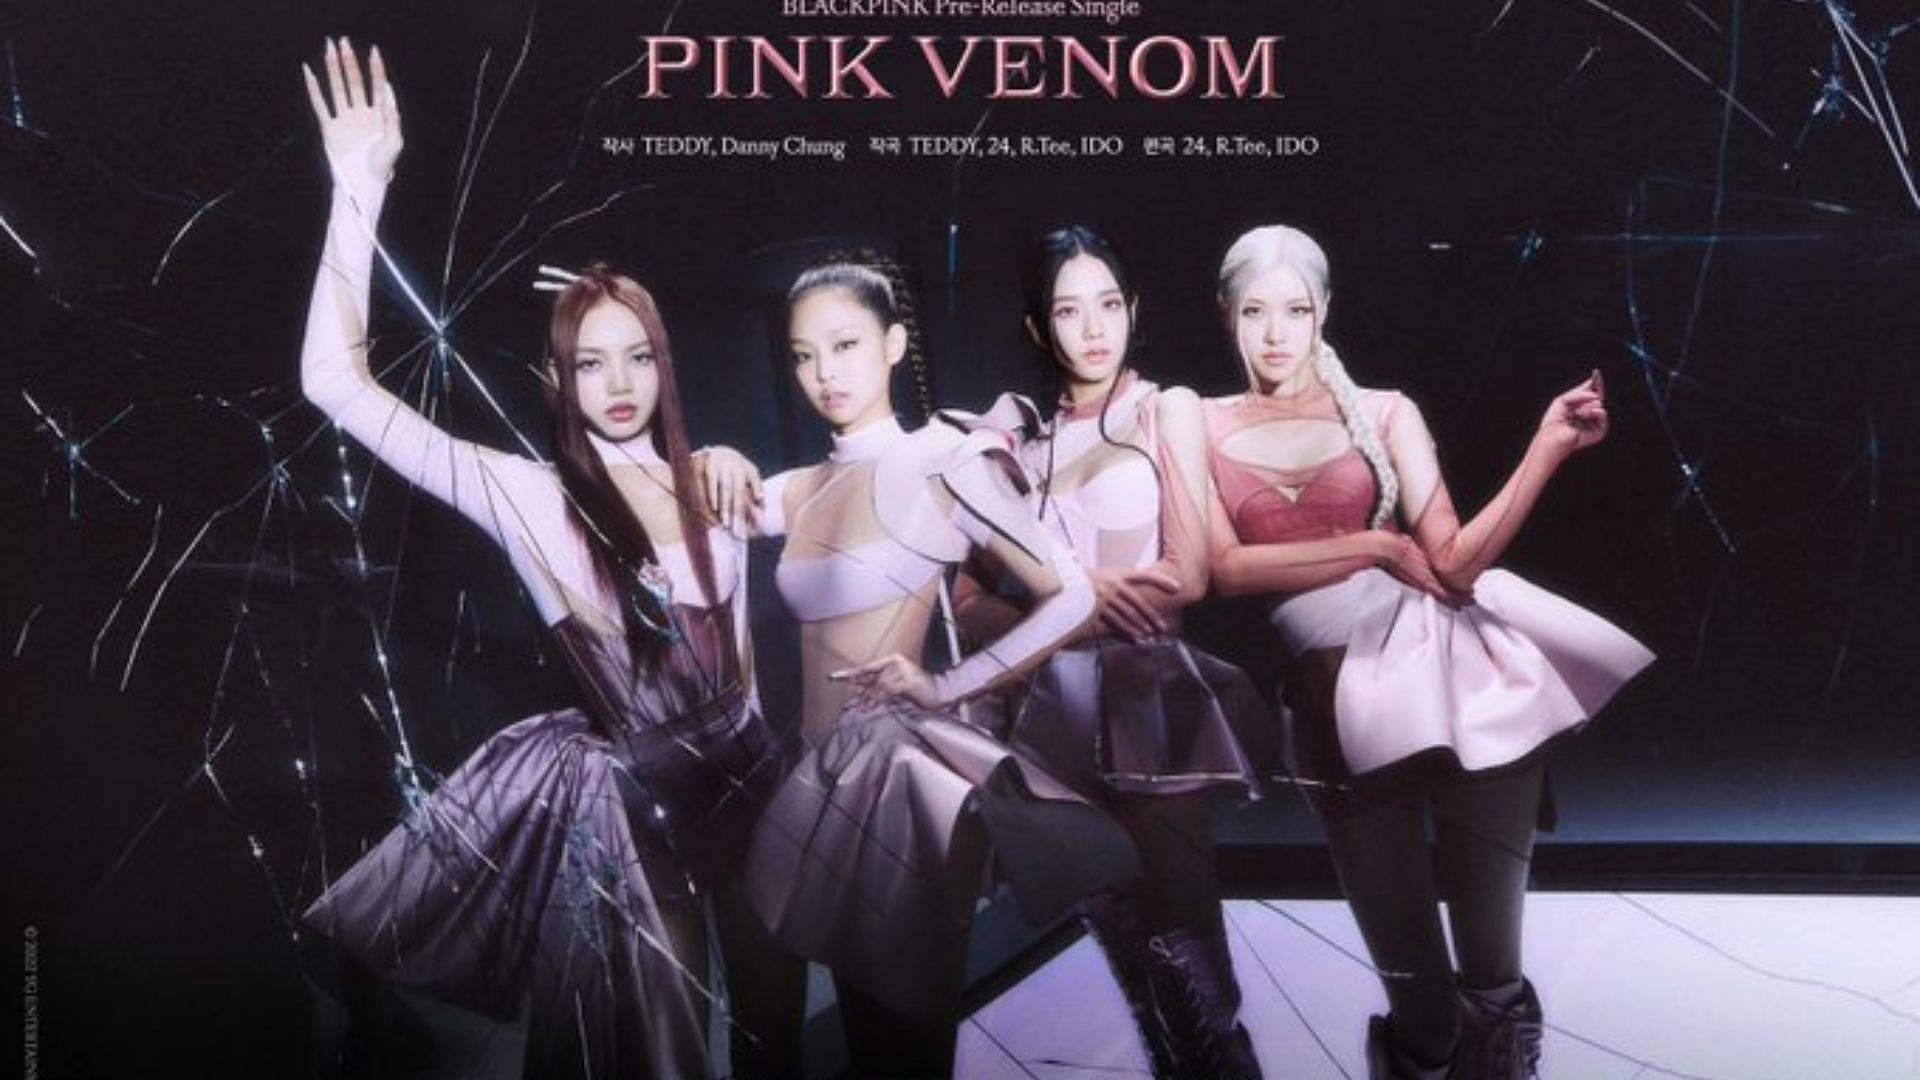 BLACKPINK pose for Pink Venom (Image via YG Entertainment)